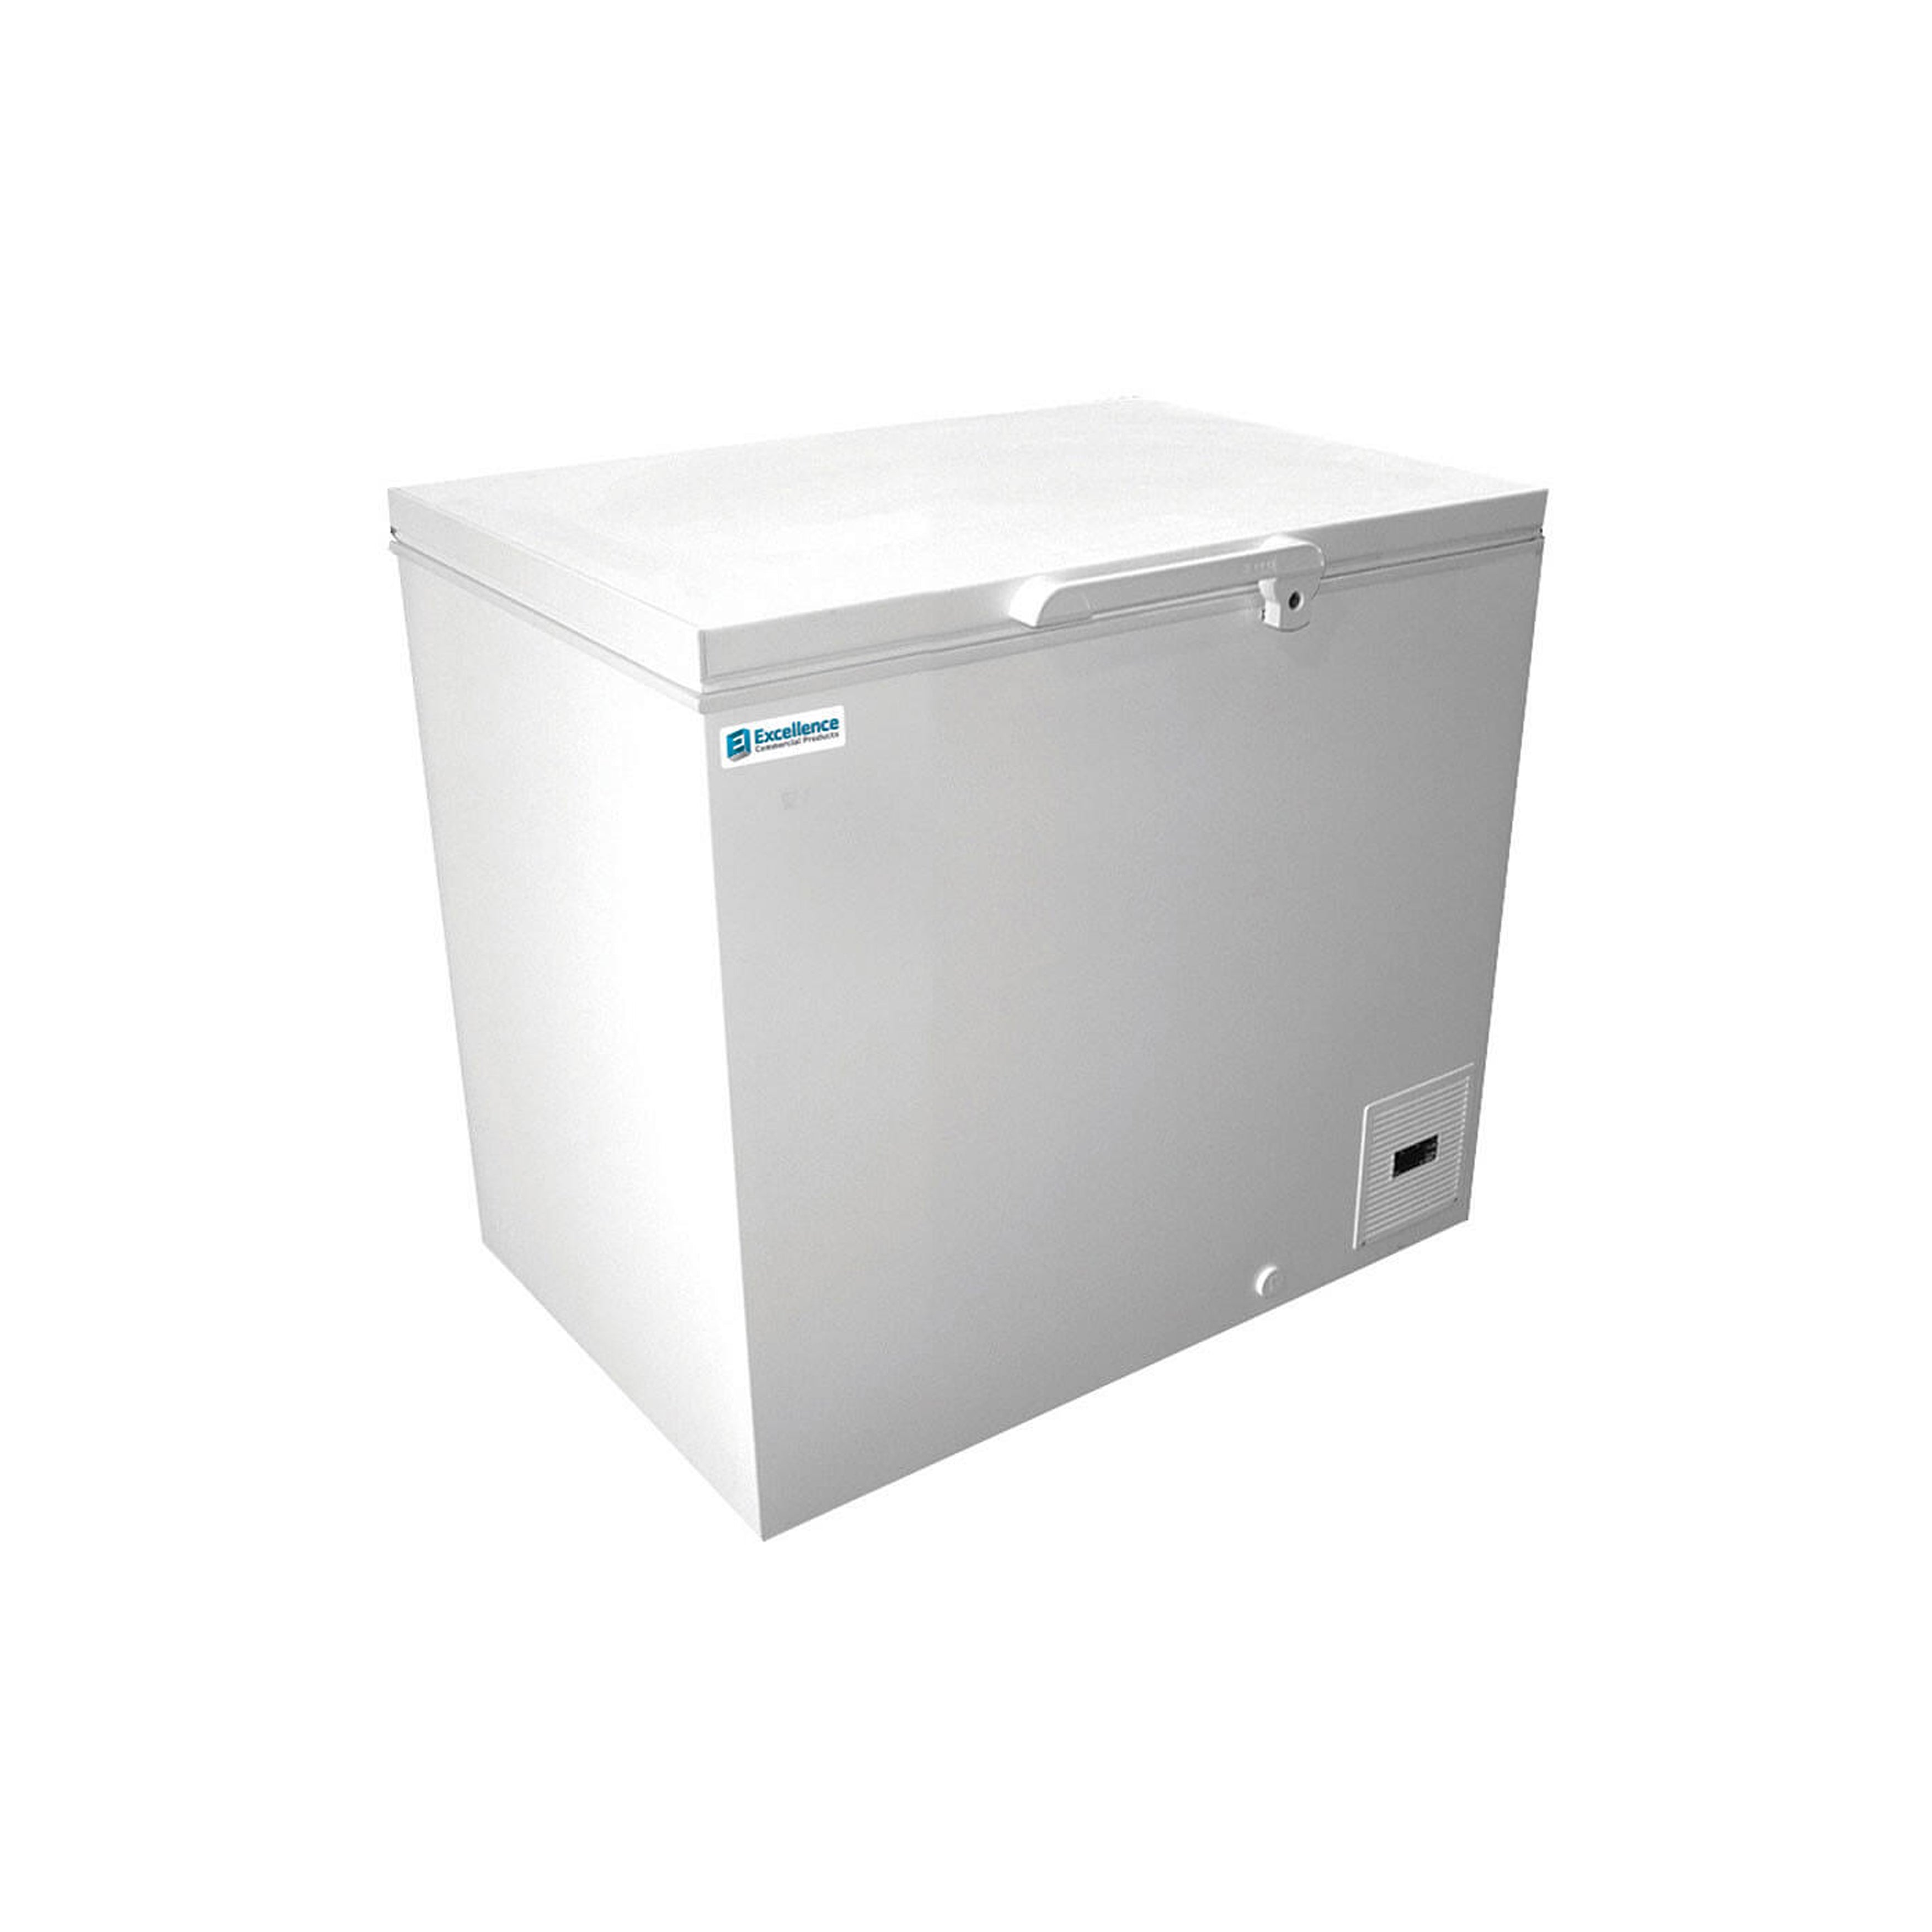 Excellence Industries - UCS-28HC, Commercial Solid Door Chest Freezer 5 cu. ft.